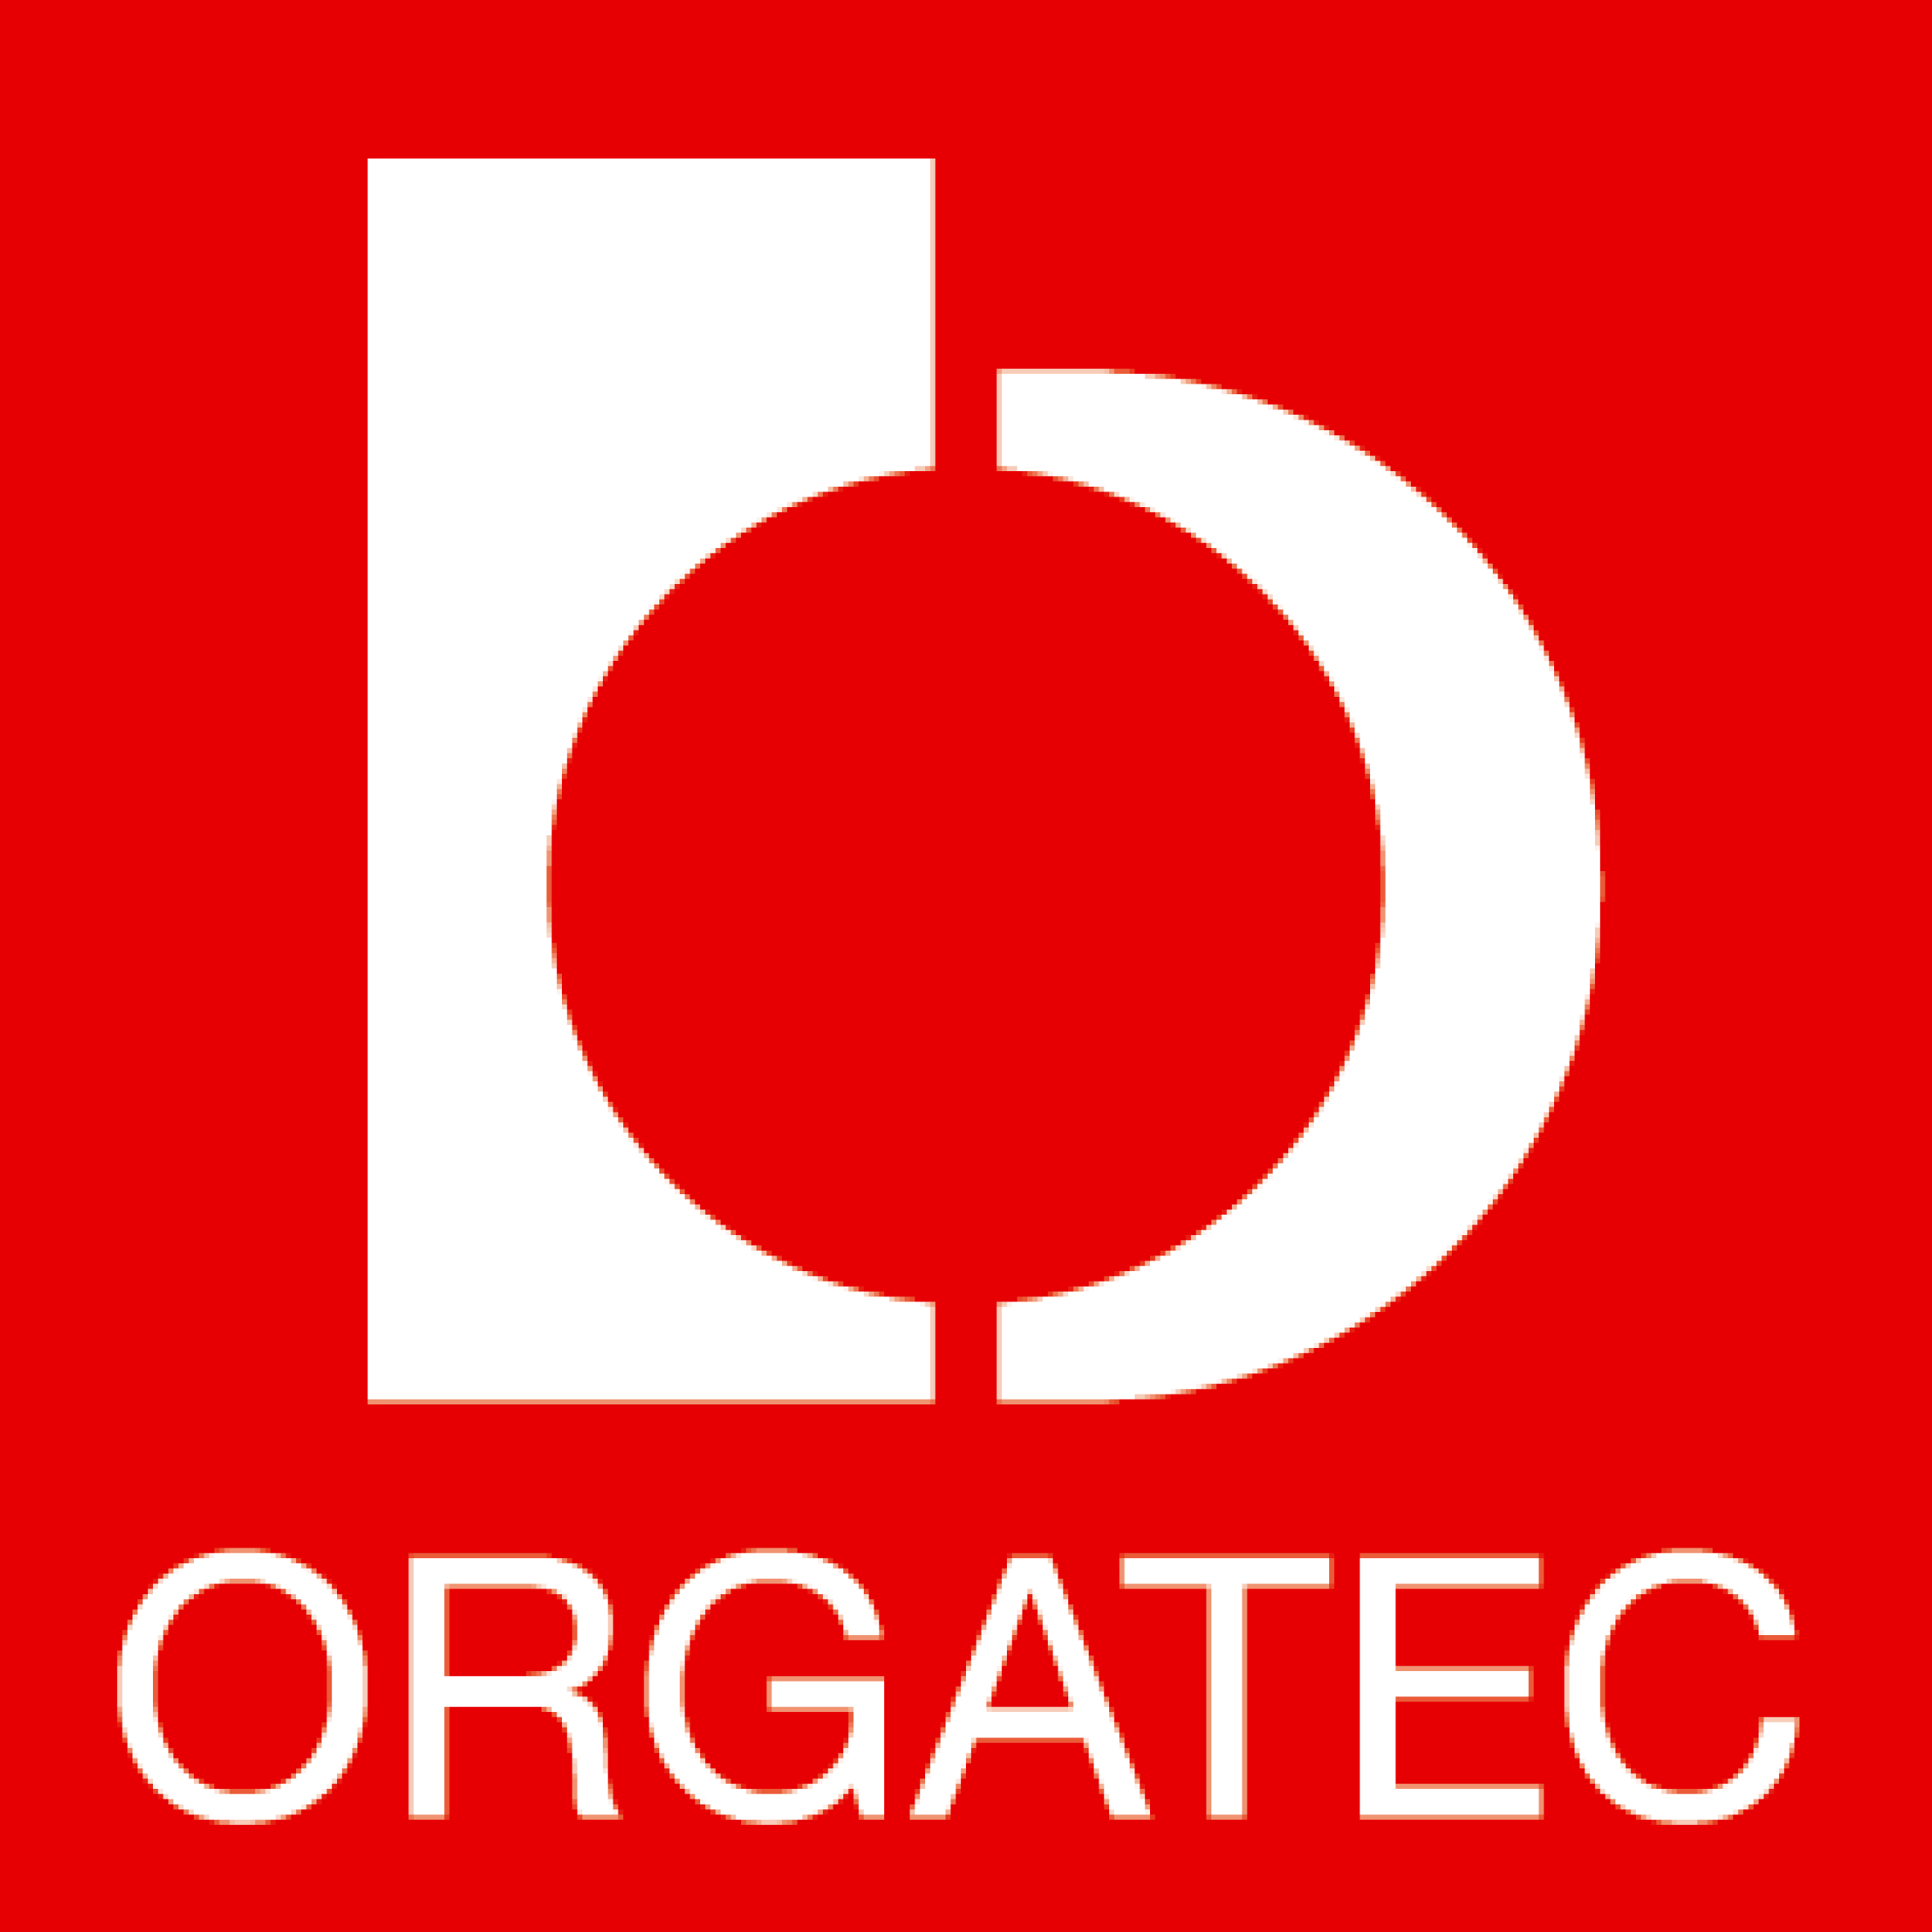 orgatec-logo_4c